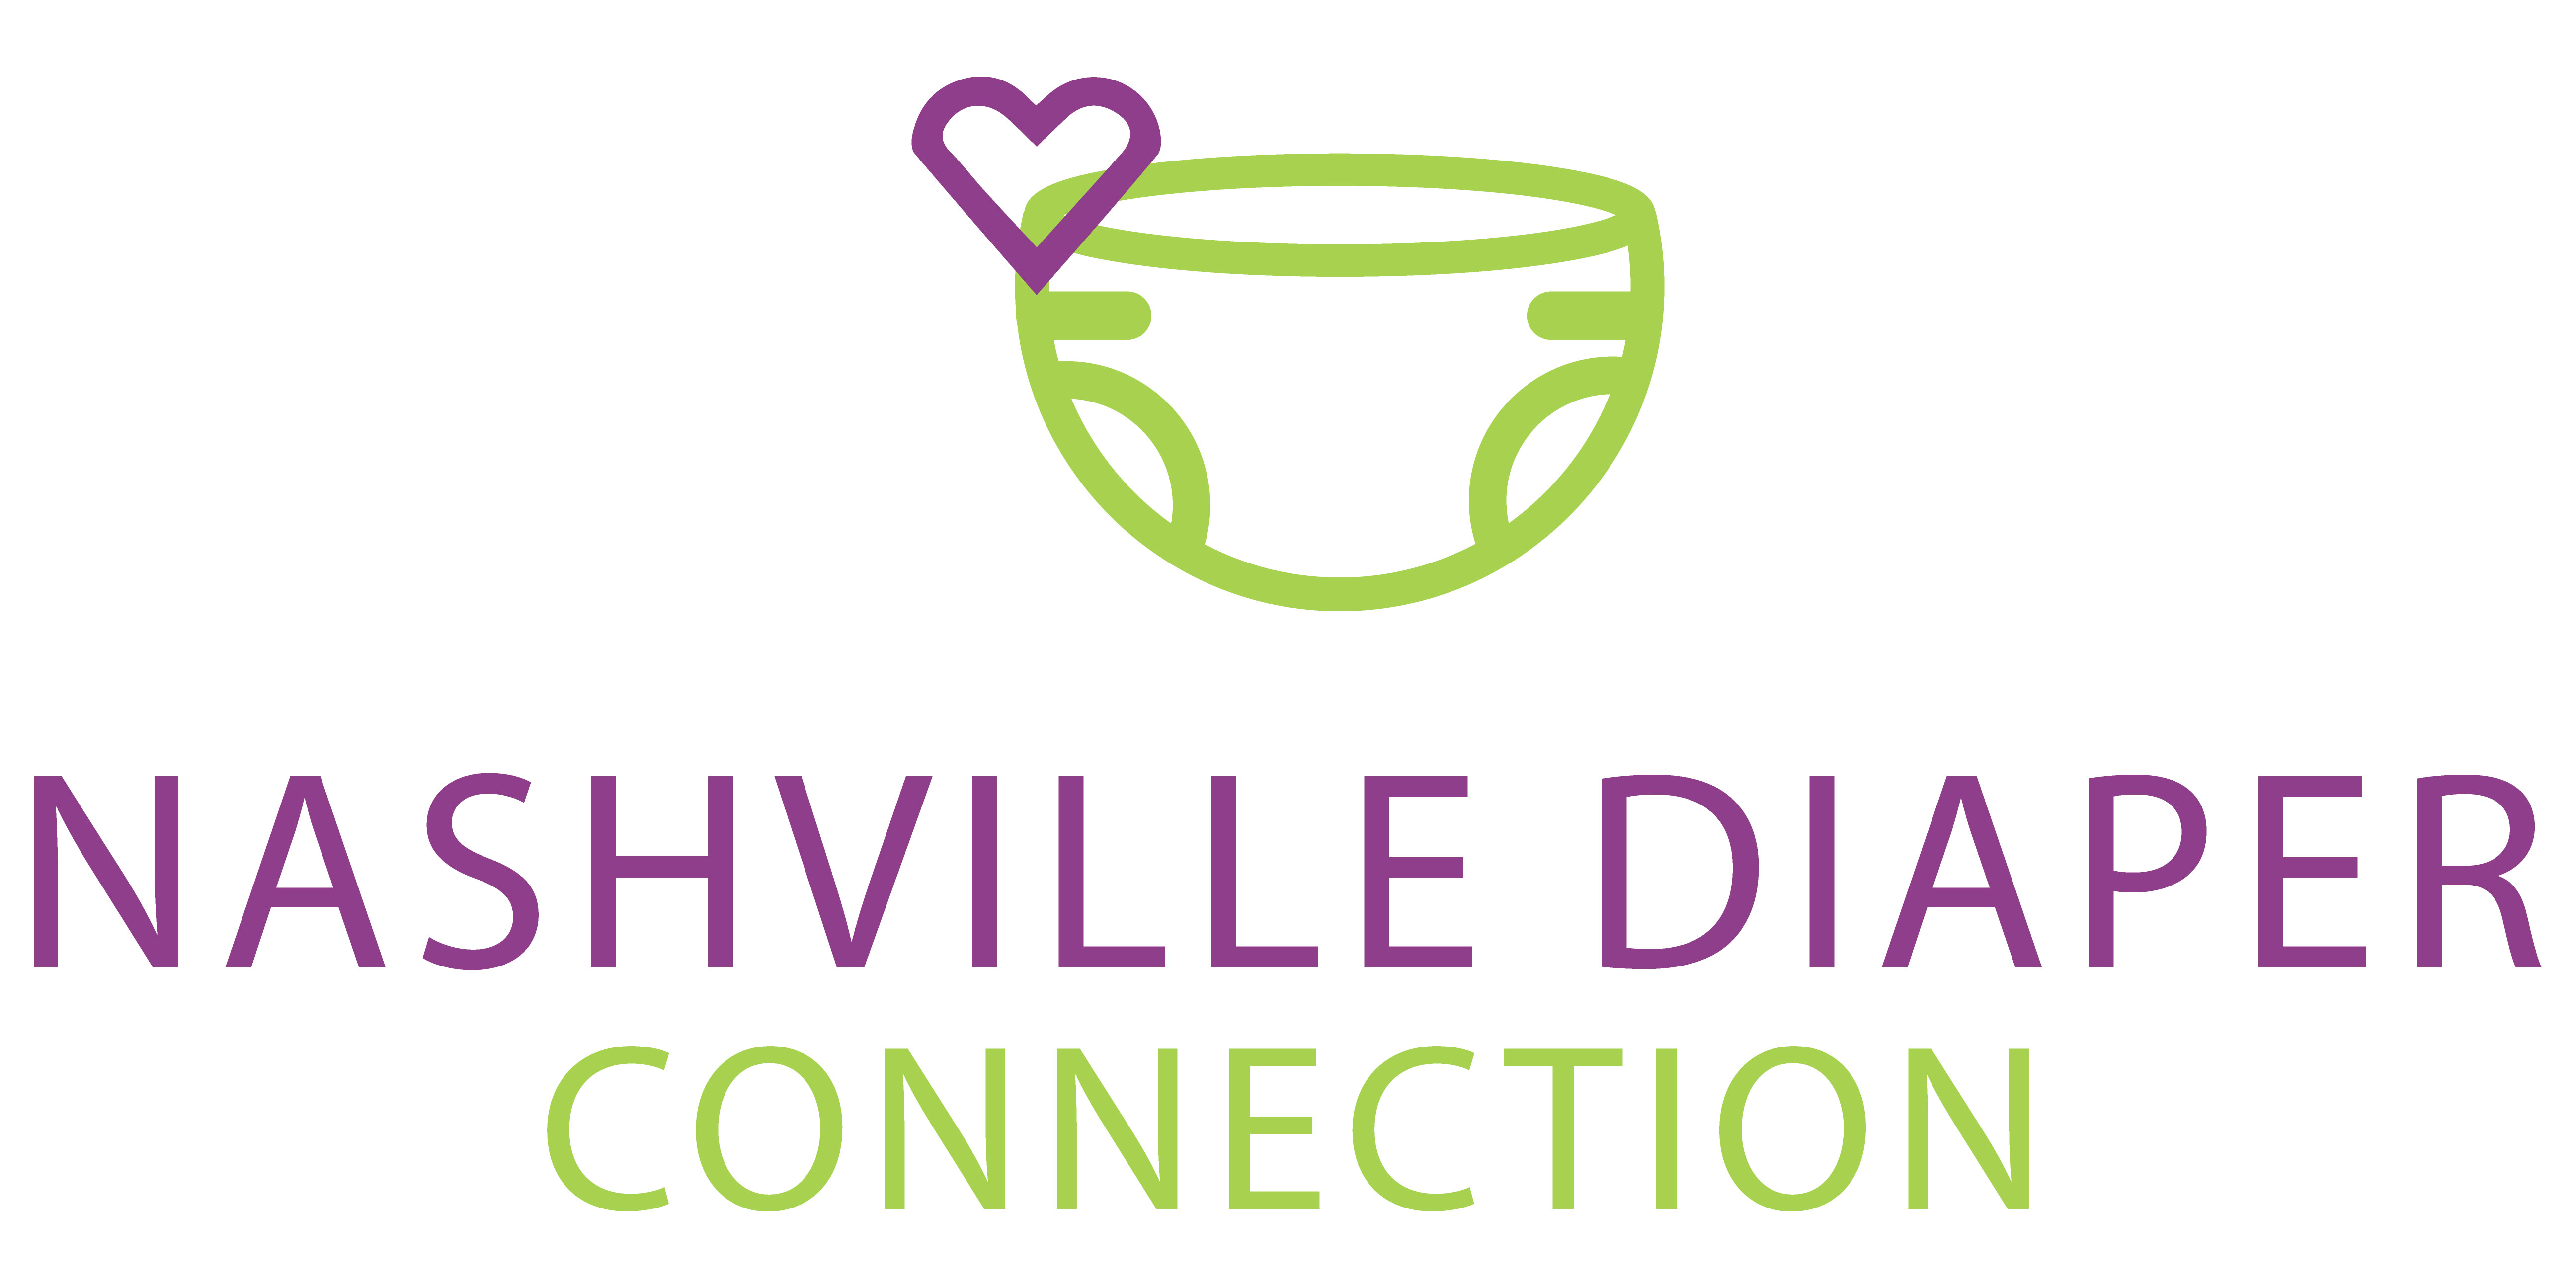 Nashville Diaper Connection logo